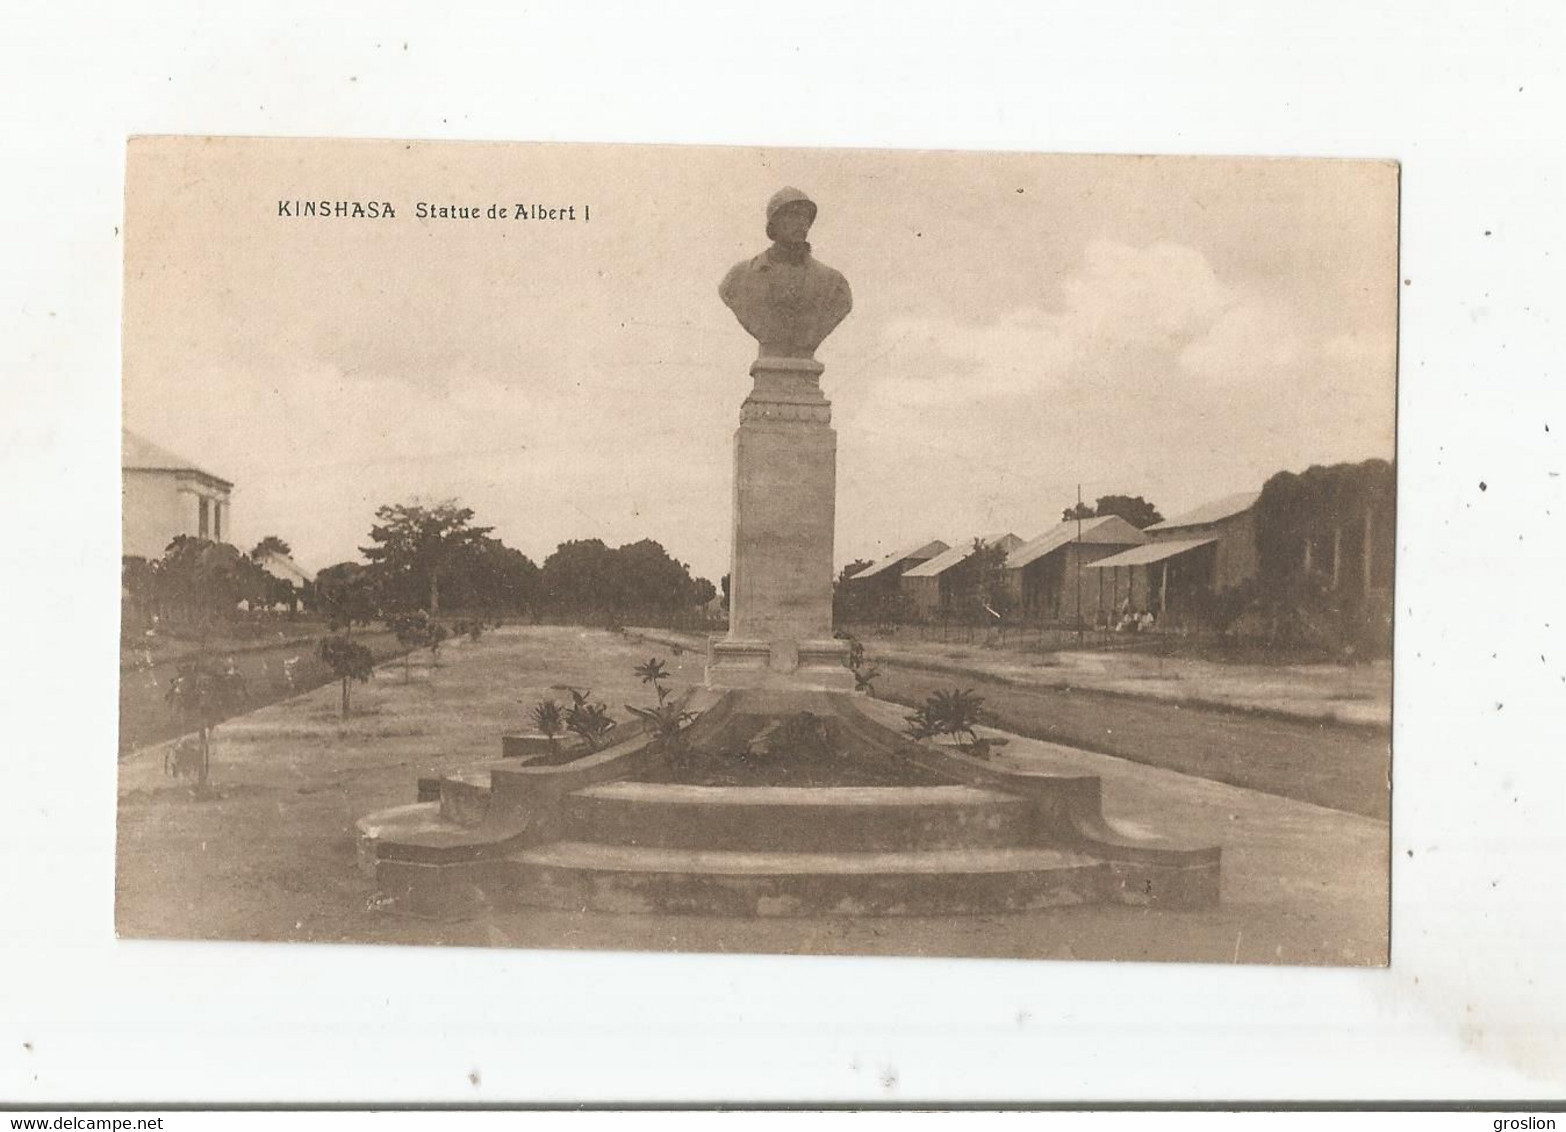 KINSHASA STATUE DE ALBERT 1 ER - Kinshasa - Leopoldville